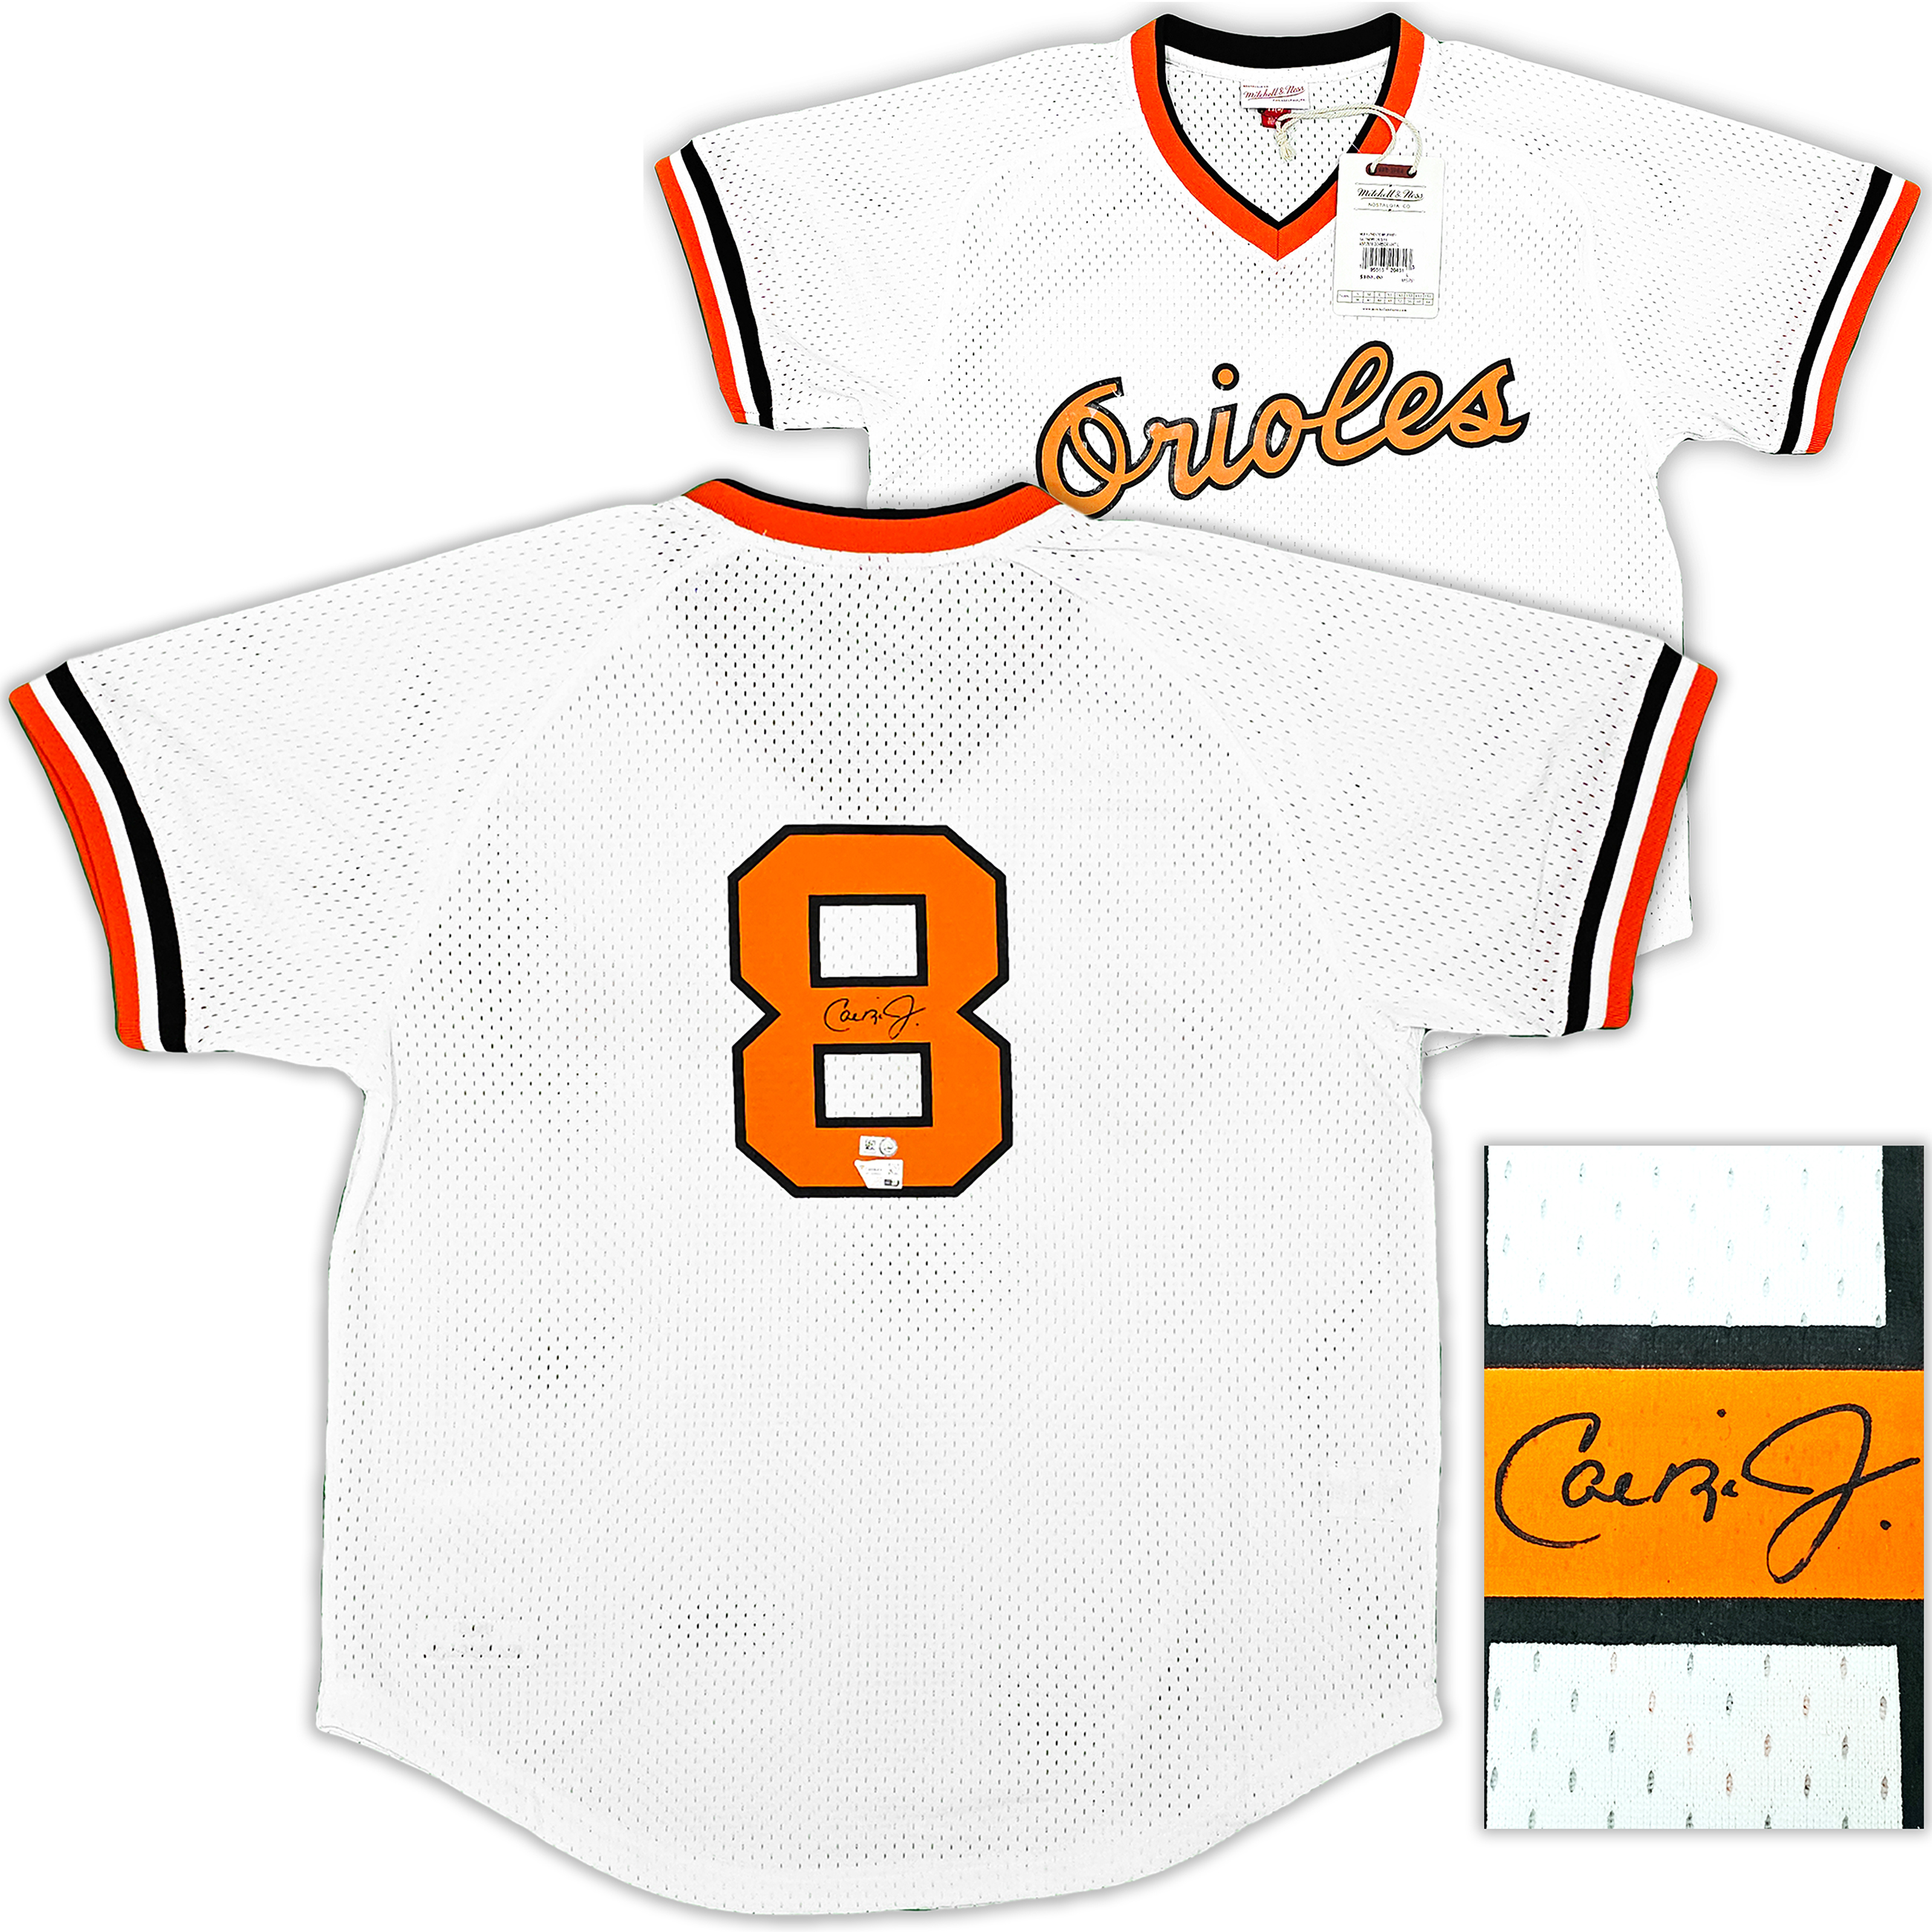 Mitchell & Ness Baltimore Orioles MLB Authentic Jersey Orange